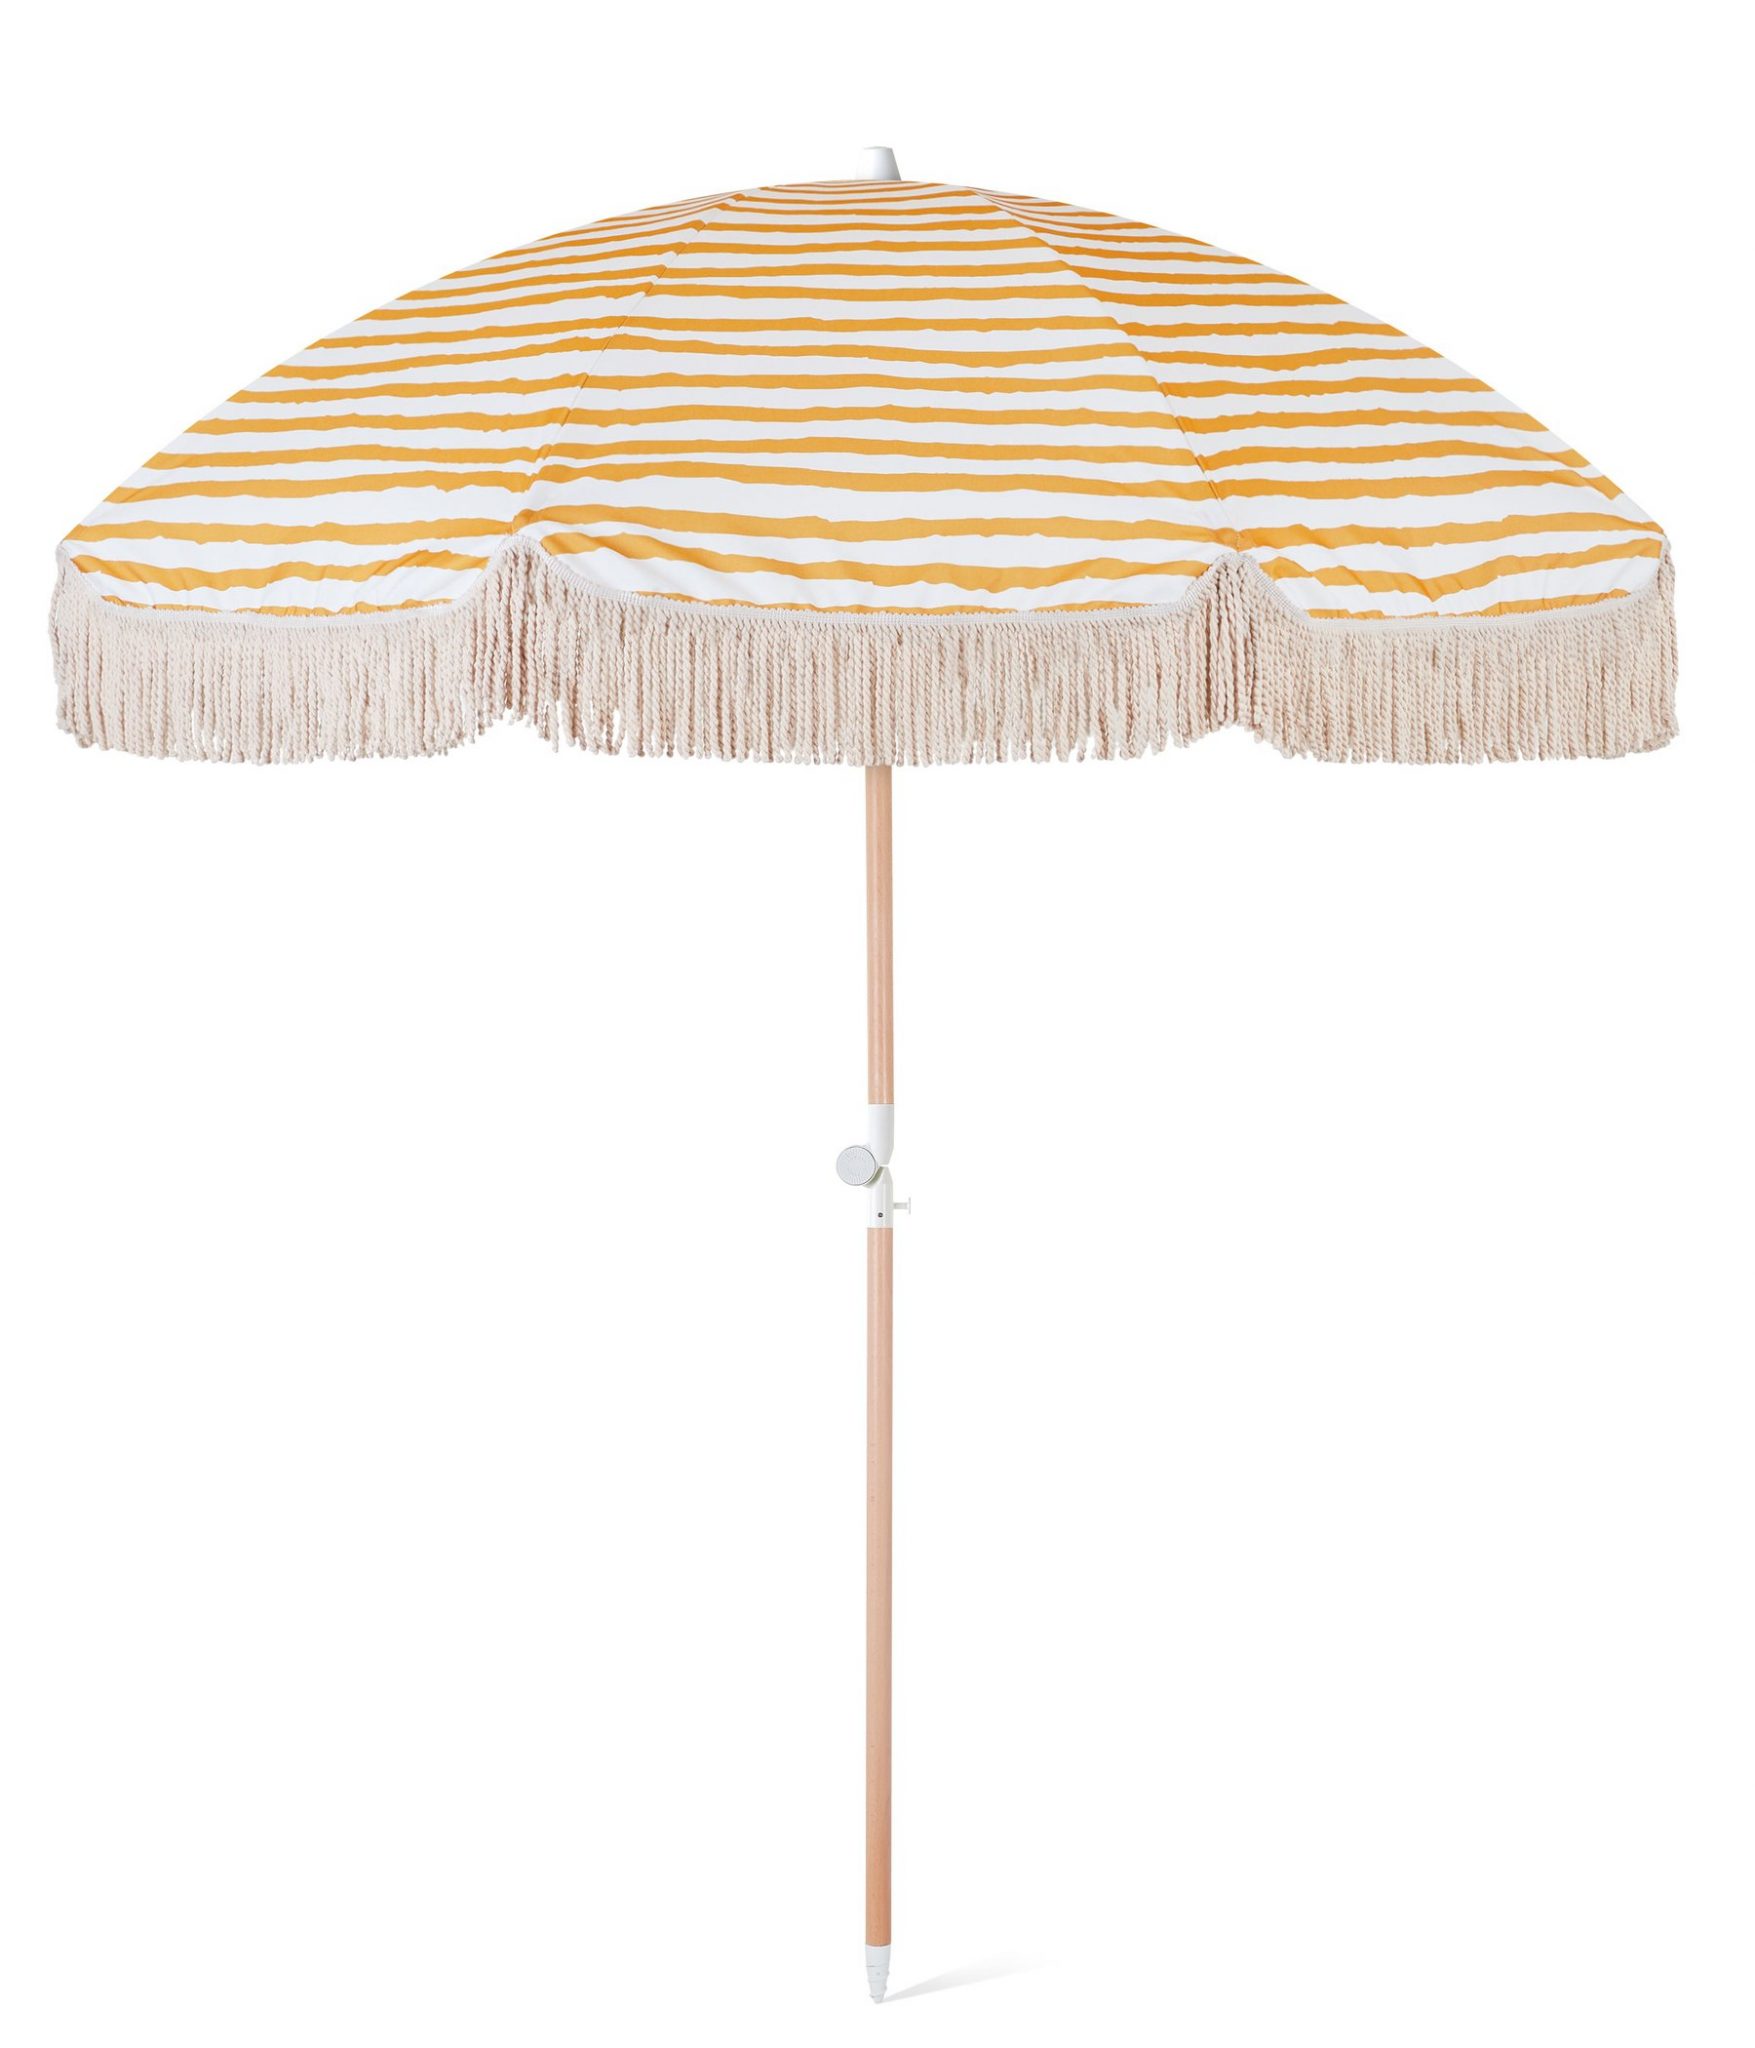 Vintage sun umbrella